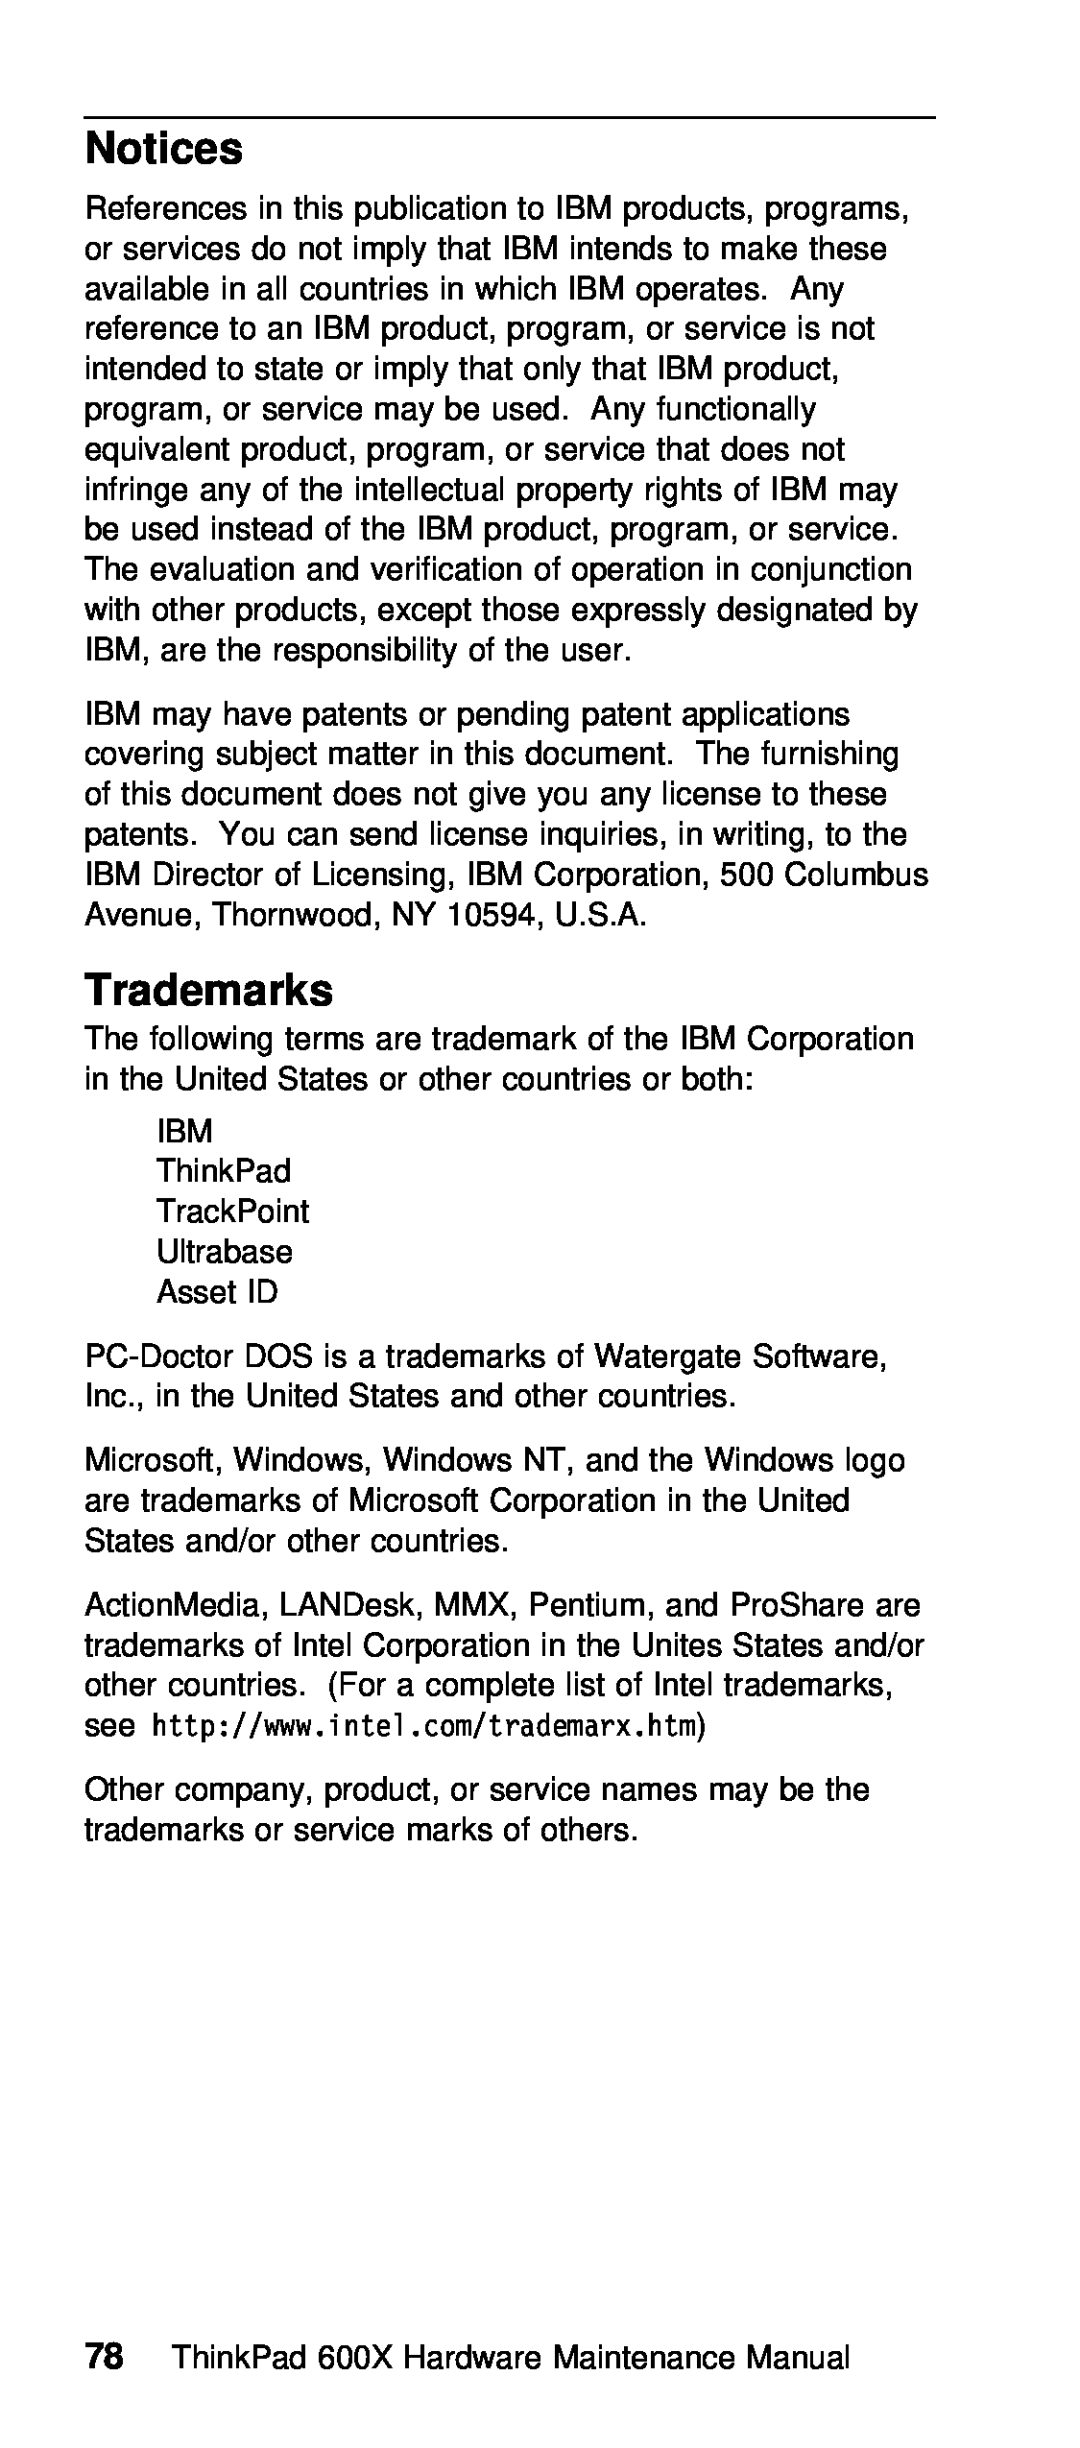 IBM 600X (MT 2646) manual Notices, Trademarks 